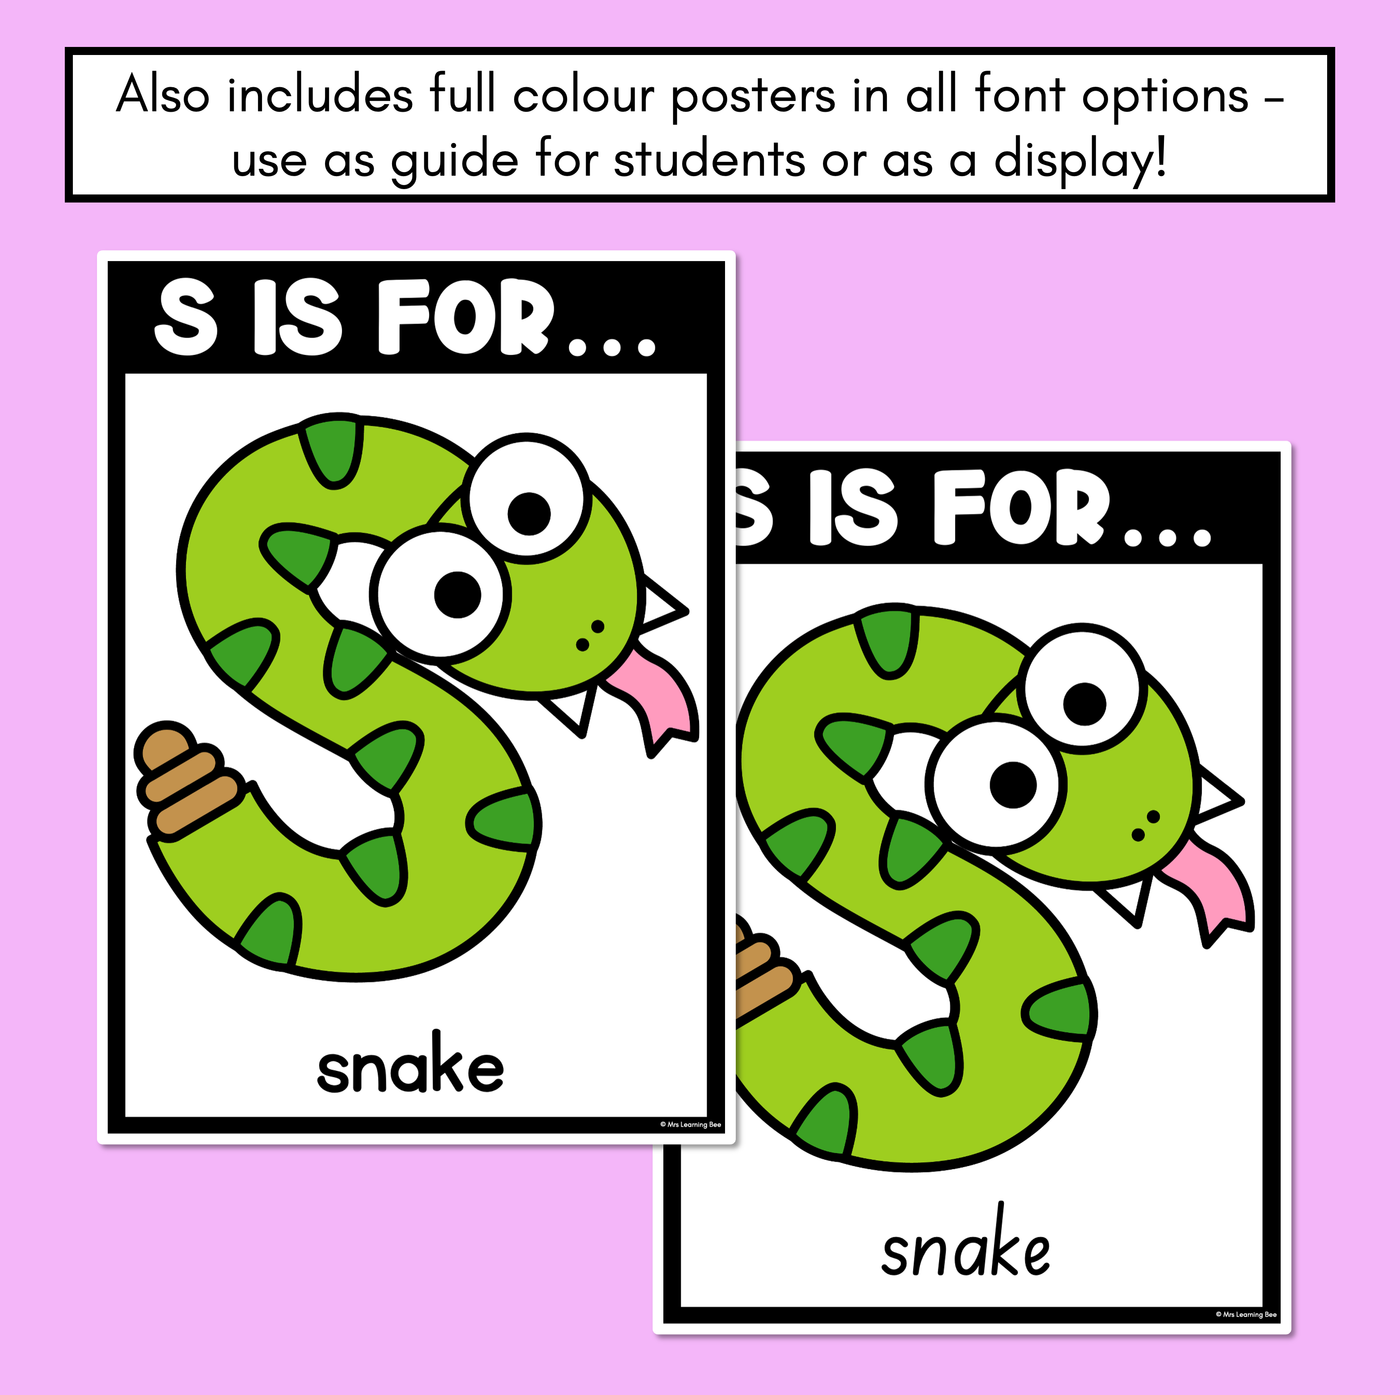 Beginning Sound Crafts - Letter S - S is for Snake